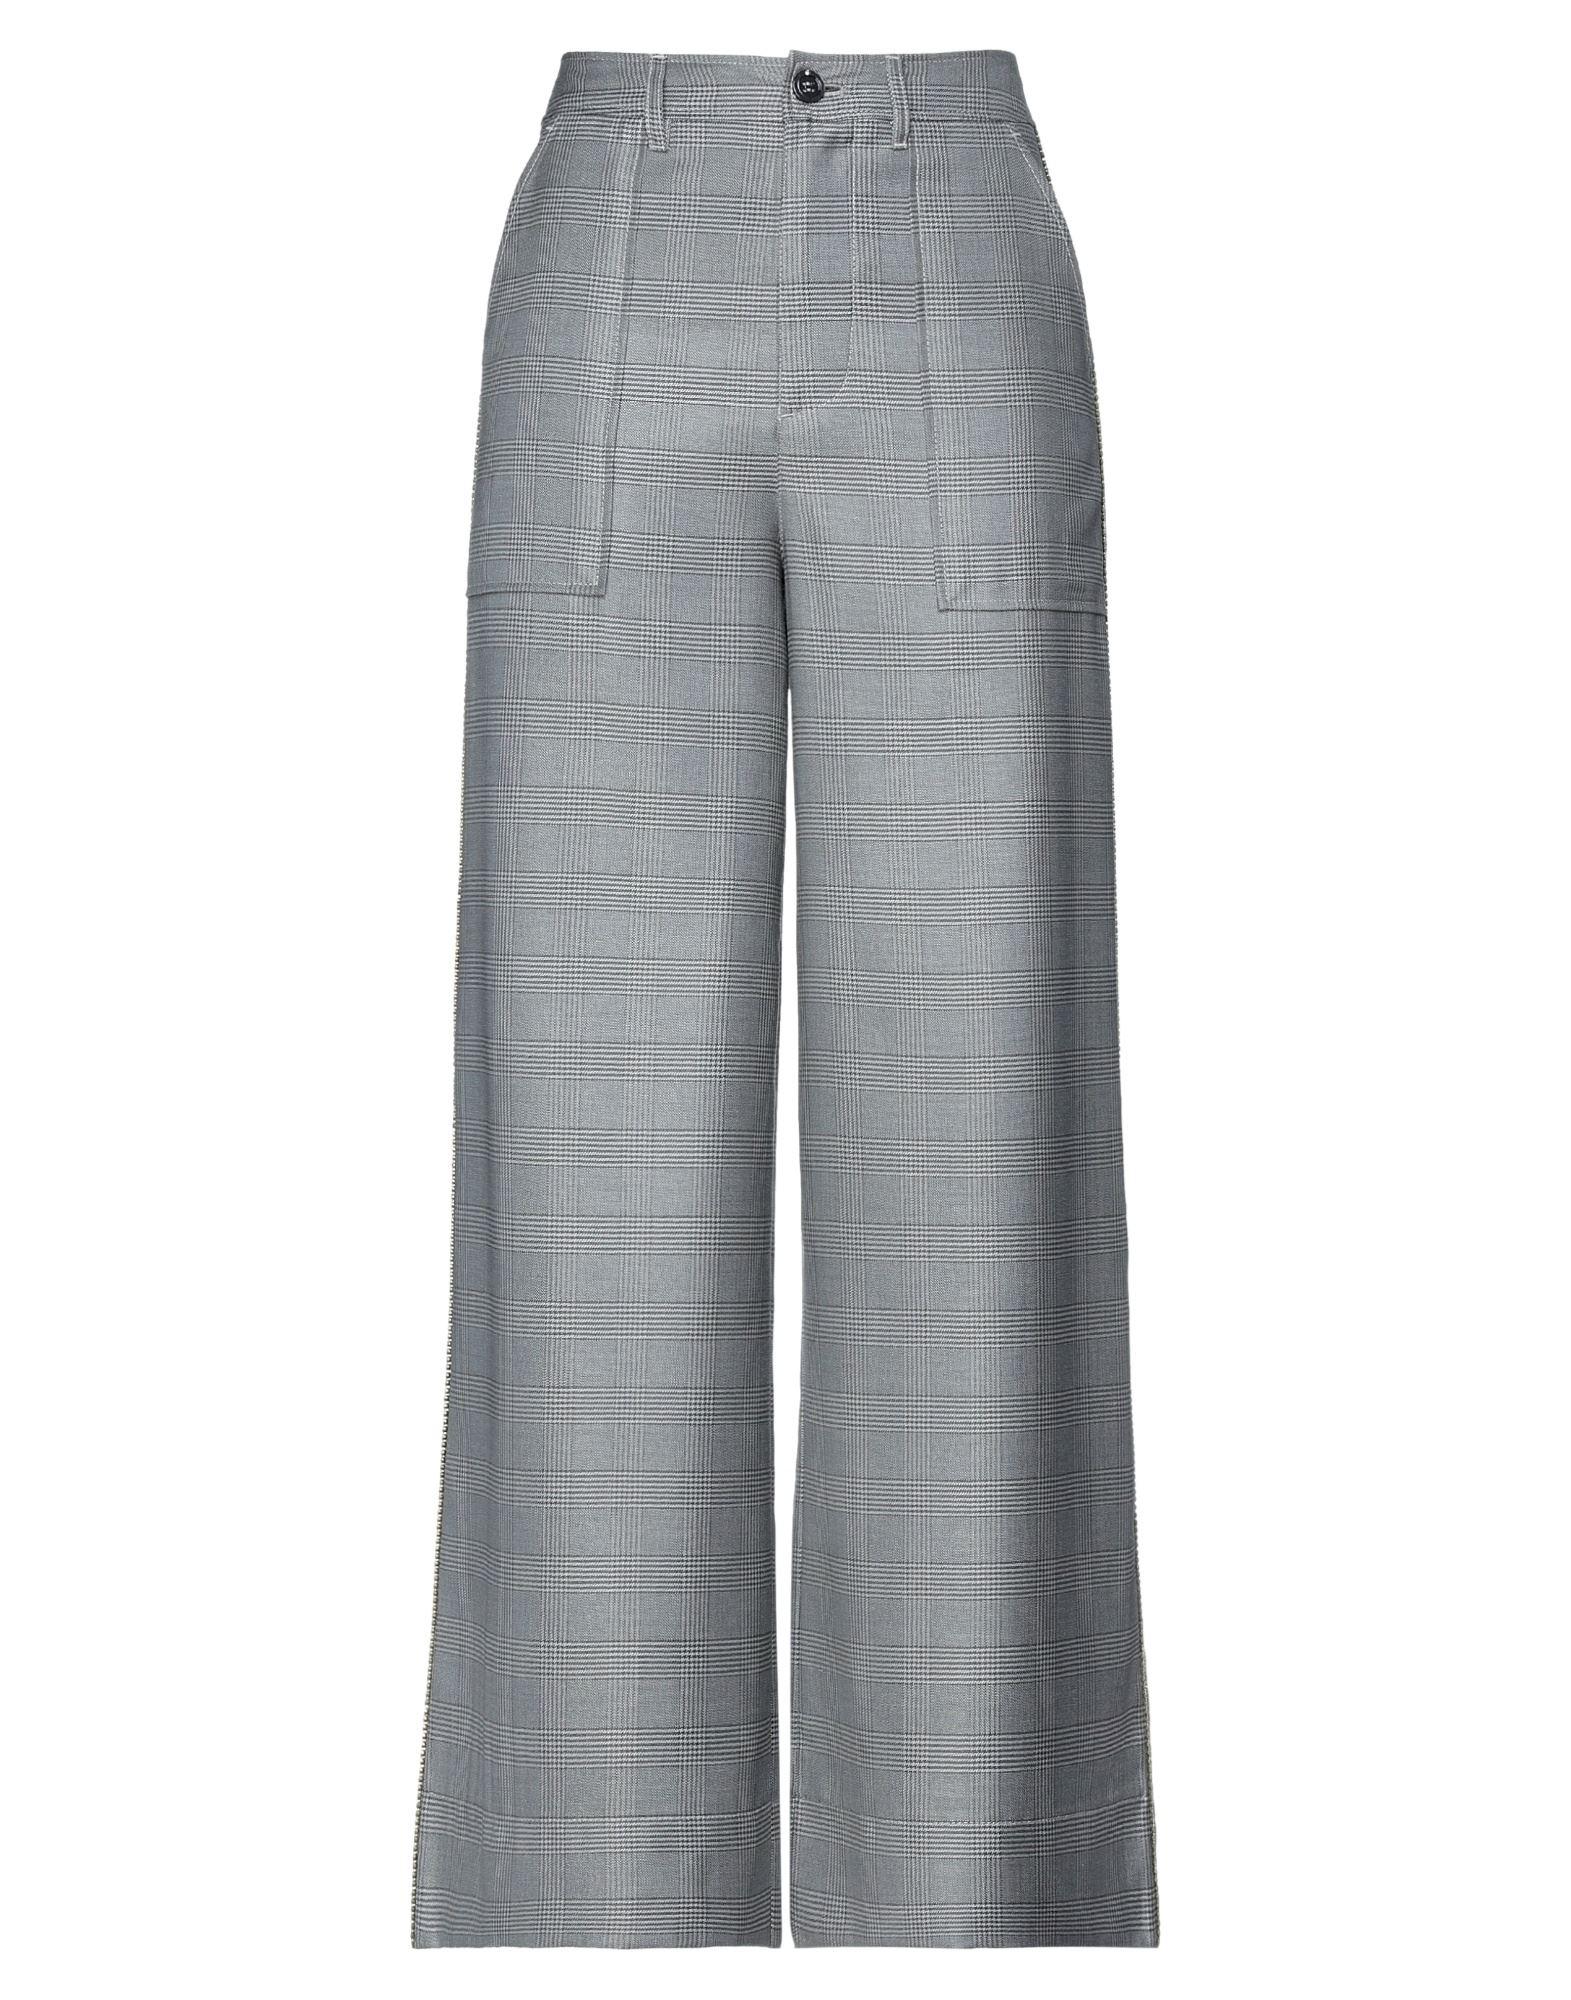 Ganni Silk Pants in Grey (Gray) - Lyst